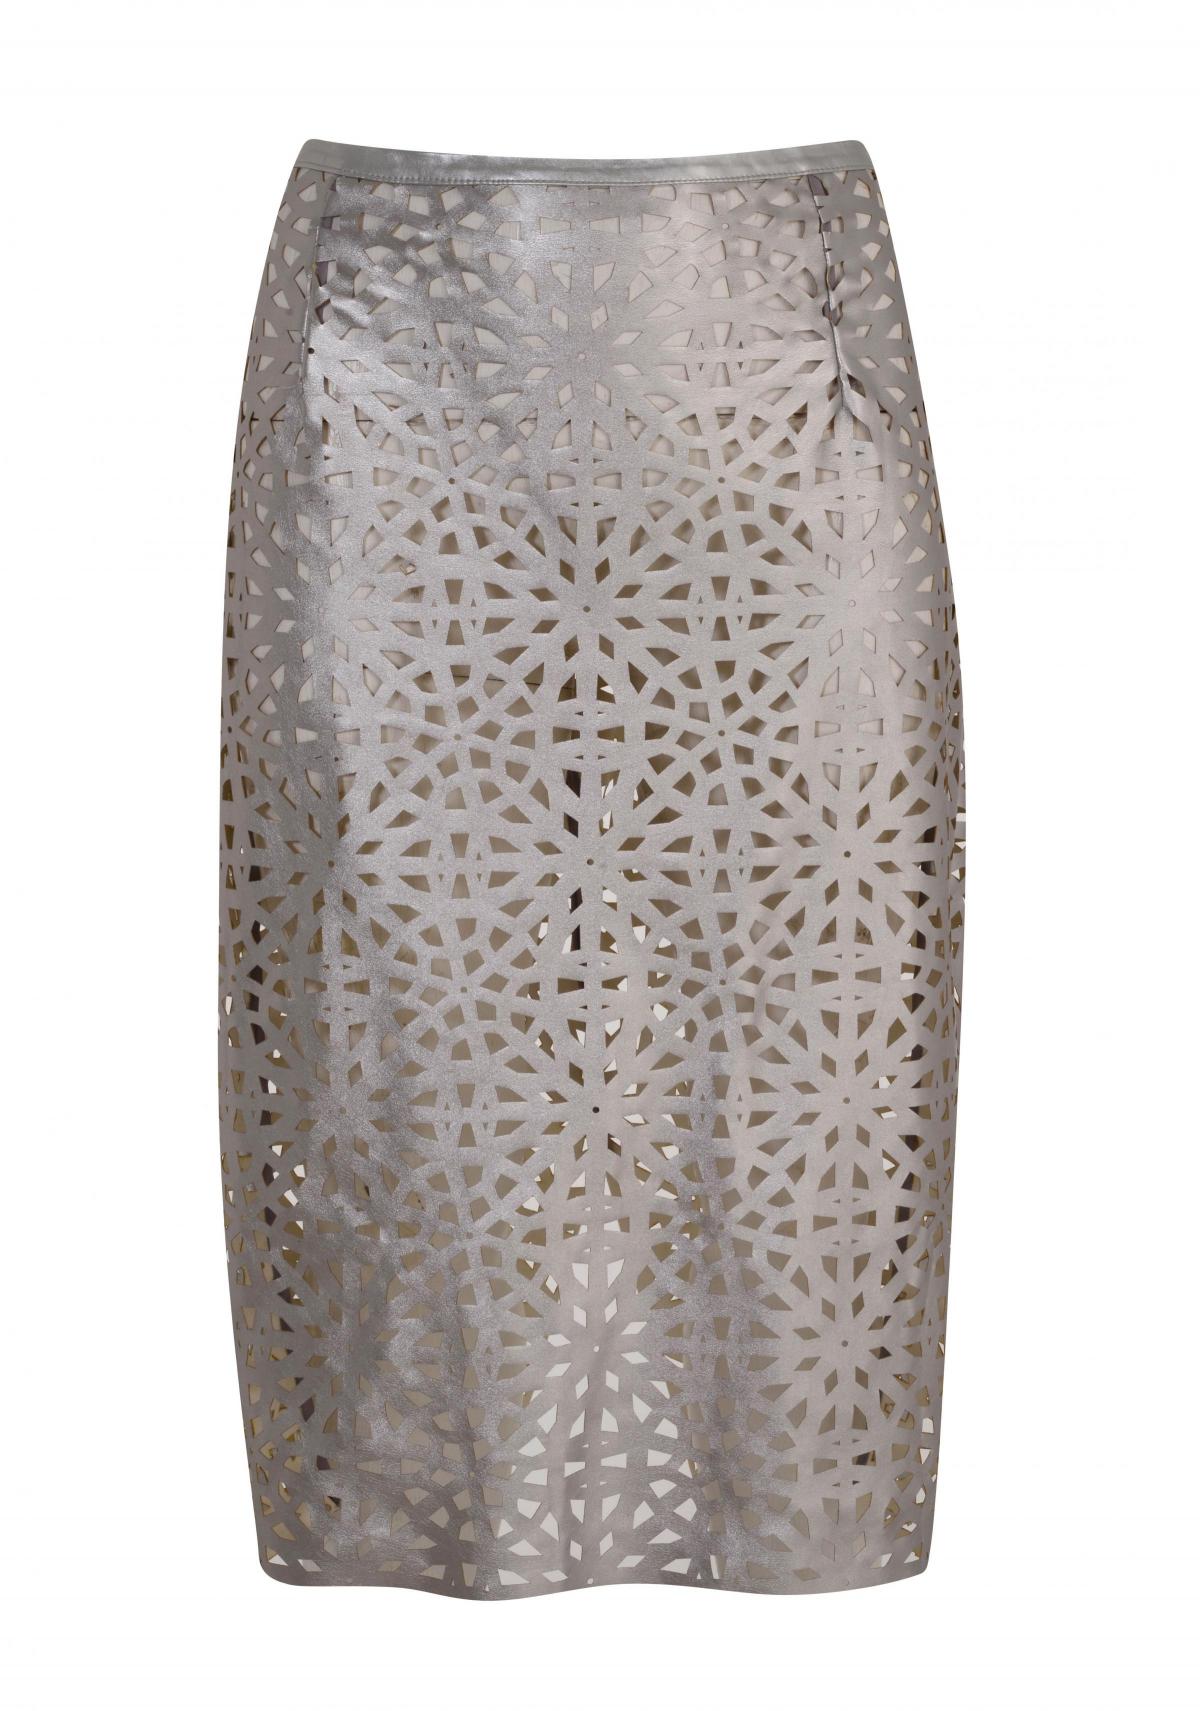 Evans in BHS, metallic laser cut pencil skirt, £60